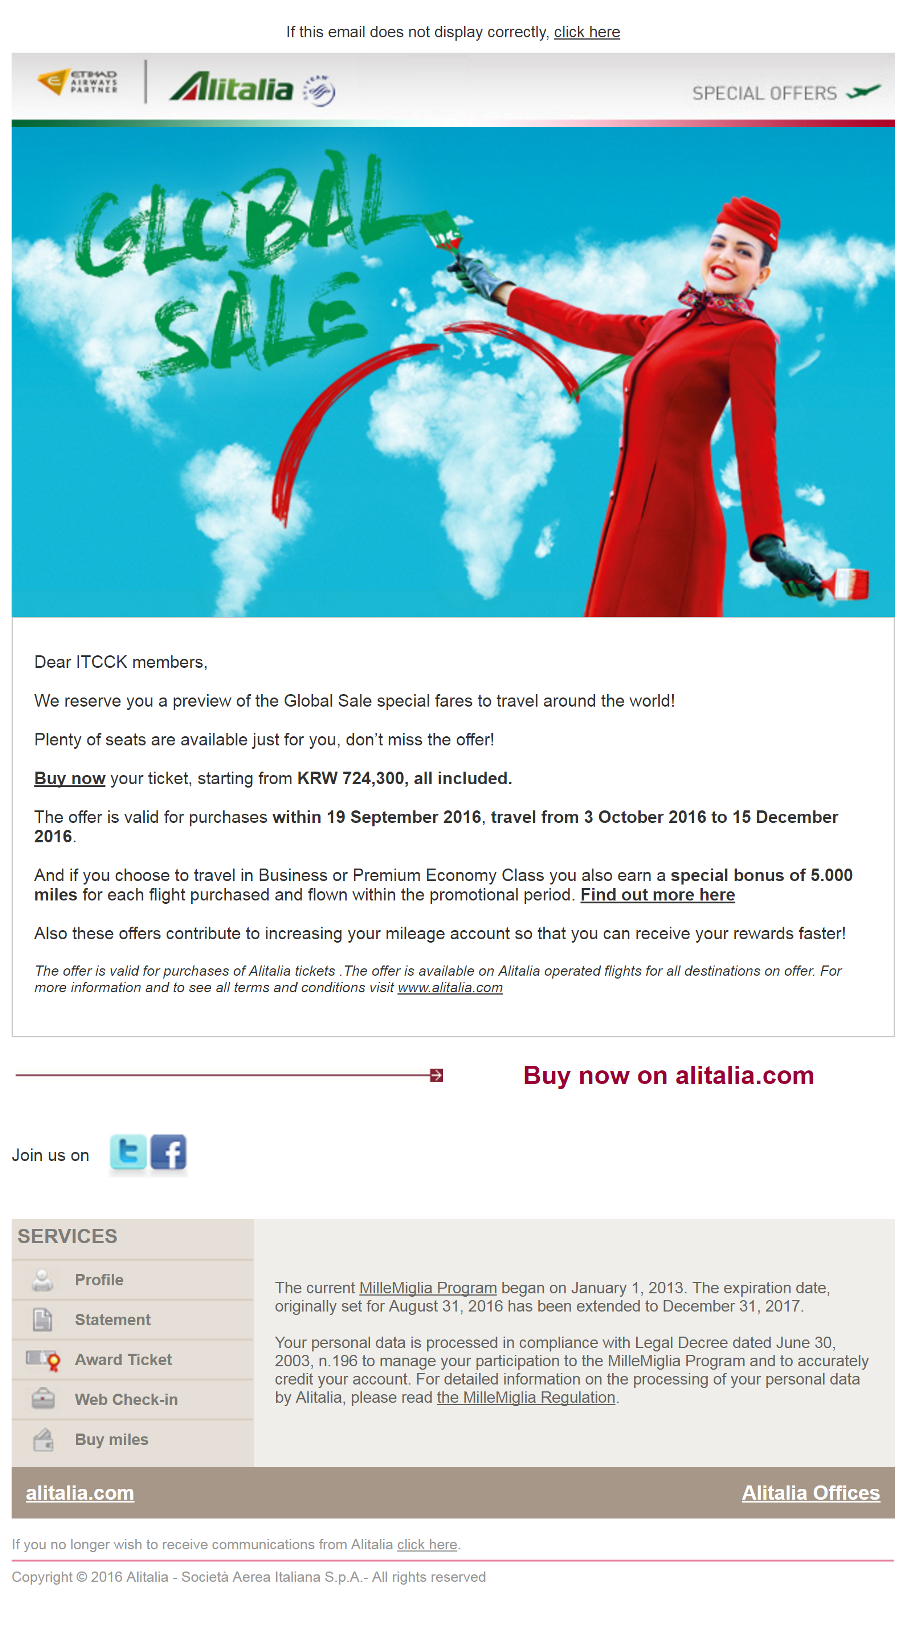 Alitalia - GLOBAL SALES: book by 19 September